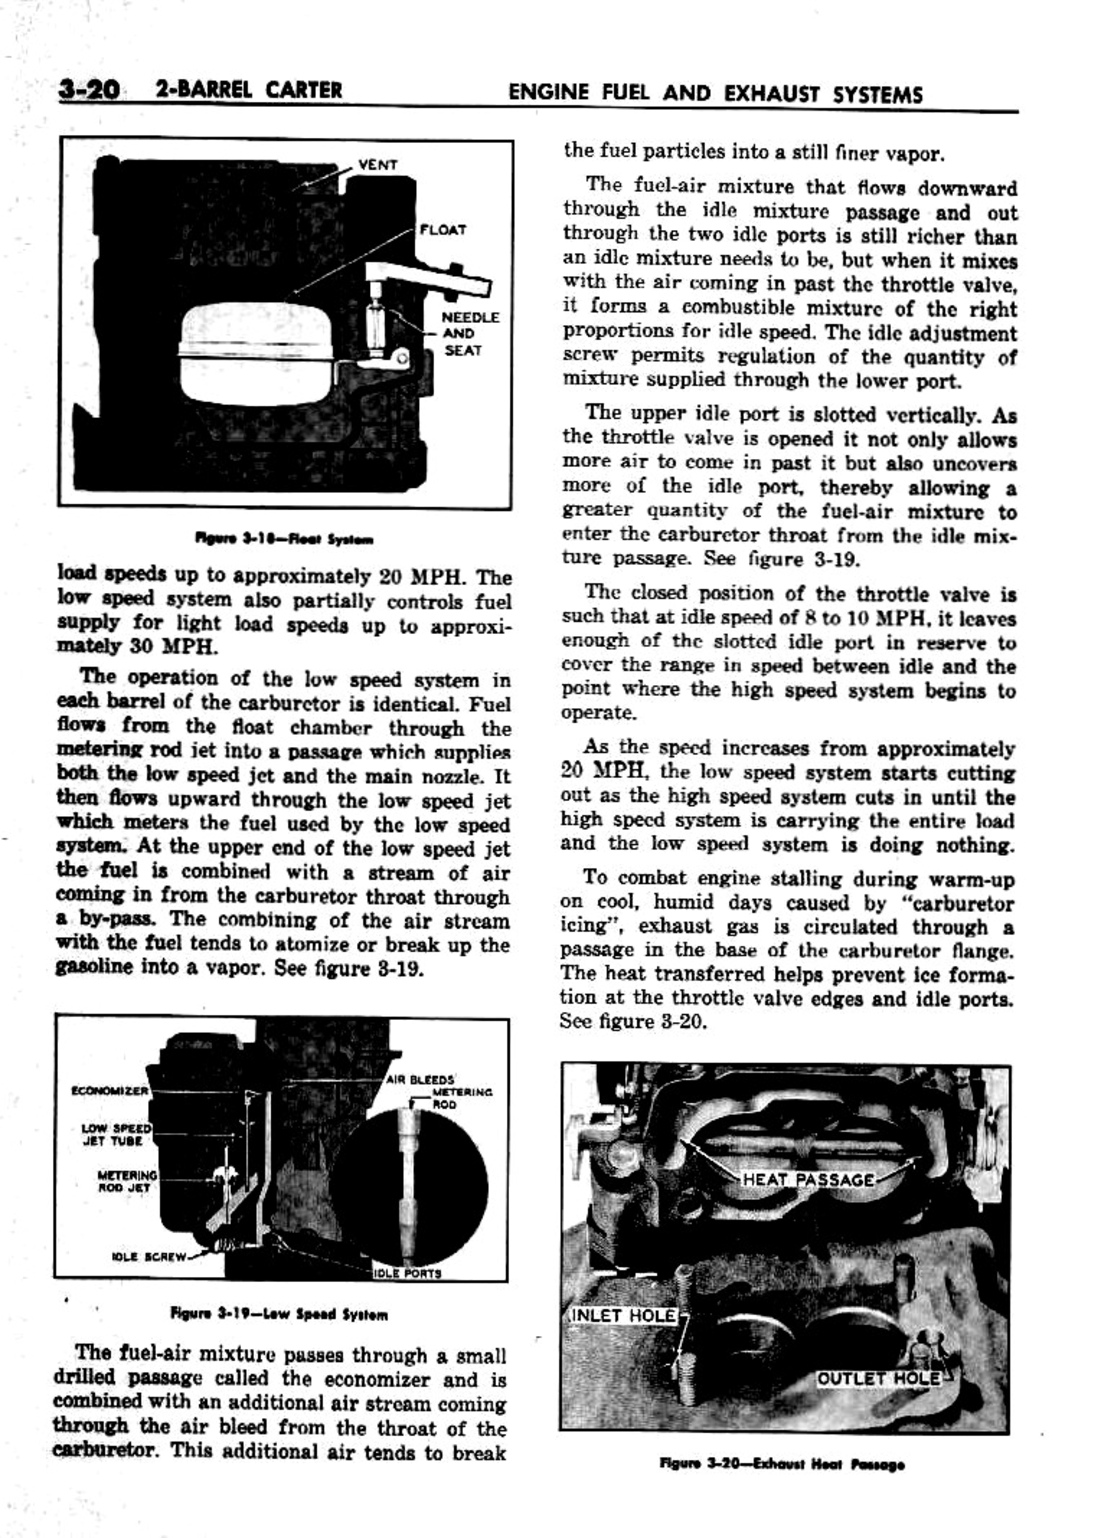 n_04 1959 Buick Shop Manual - Engine Fuel & Exhaust-020-020.jpg